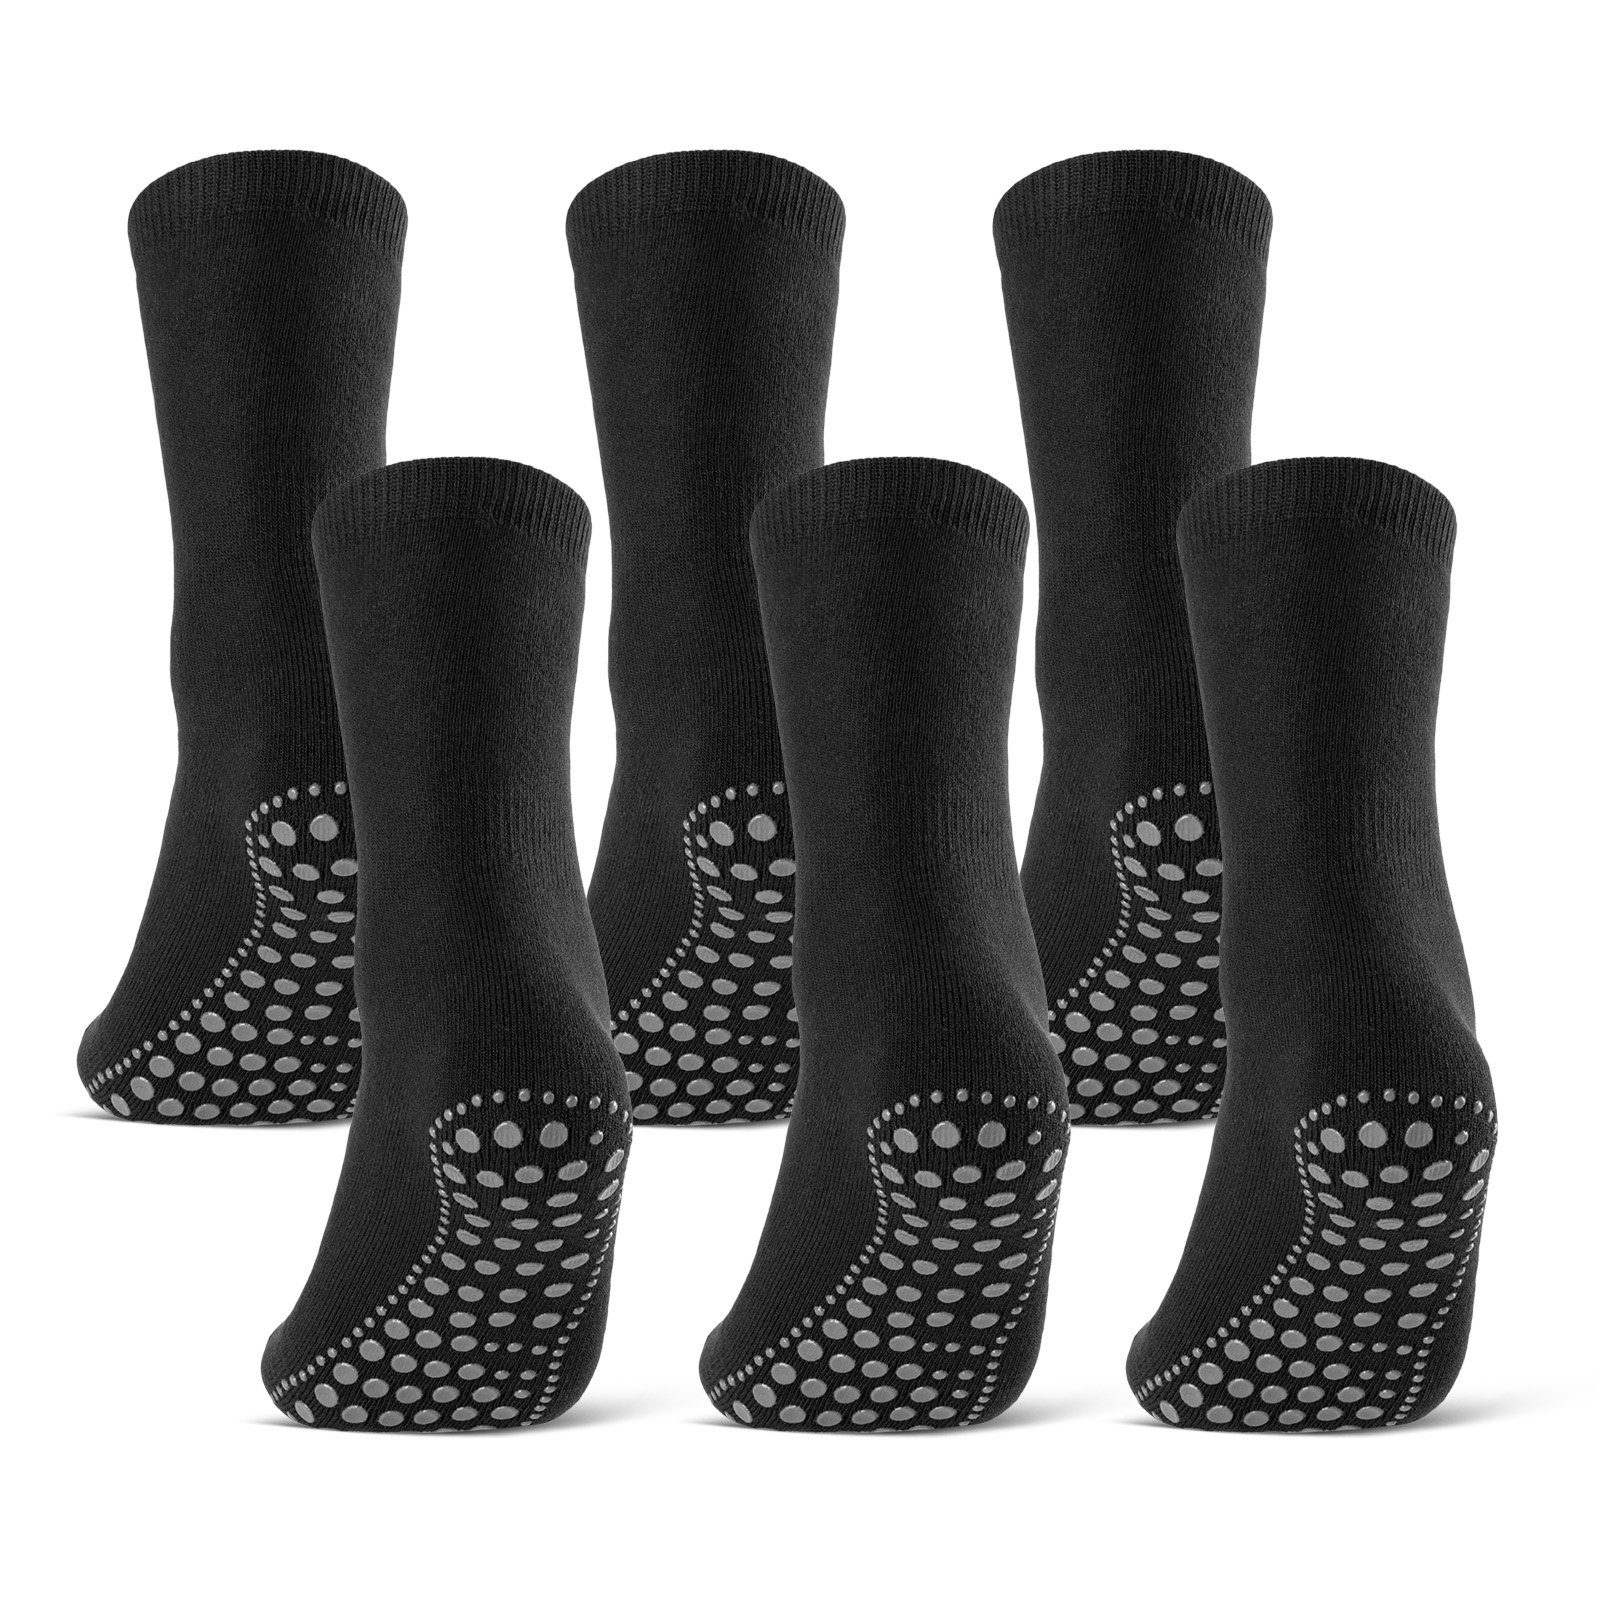 sockenkauf24 ABS-Socken 3 oder 6 Paar "Premium" Anti Rutsch Socken Damen Herren (Schwarz, 6-Paar, 39-42) ABS Socken Noppen Stoppersocken - 8600 WP